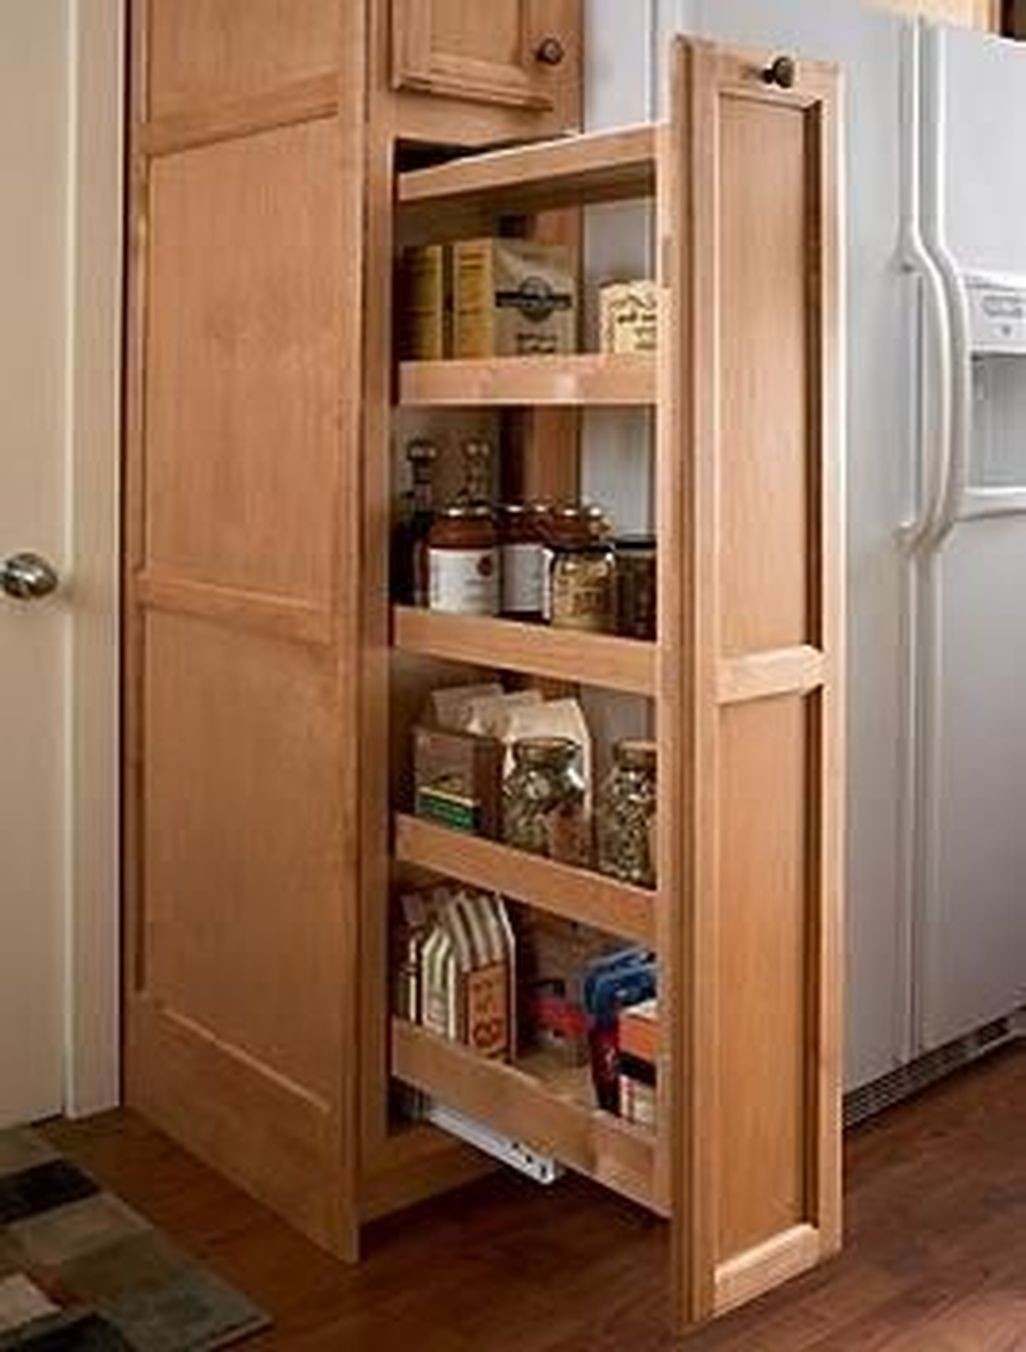  narrow kitchen cabinets